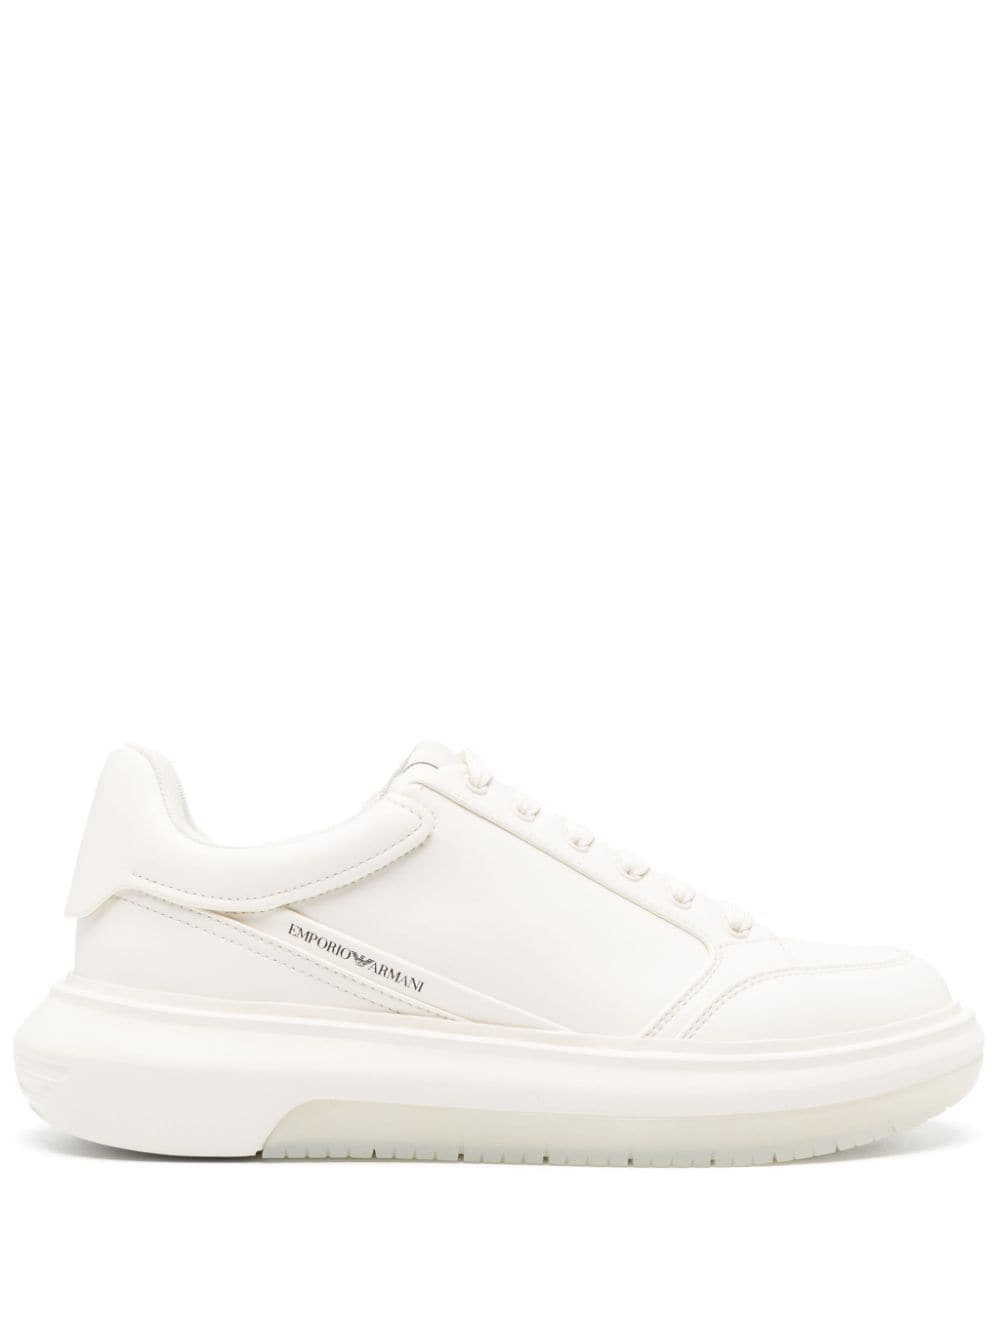 Emporio Armani White Printed Sneakers In Off White+off White